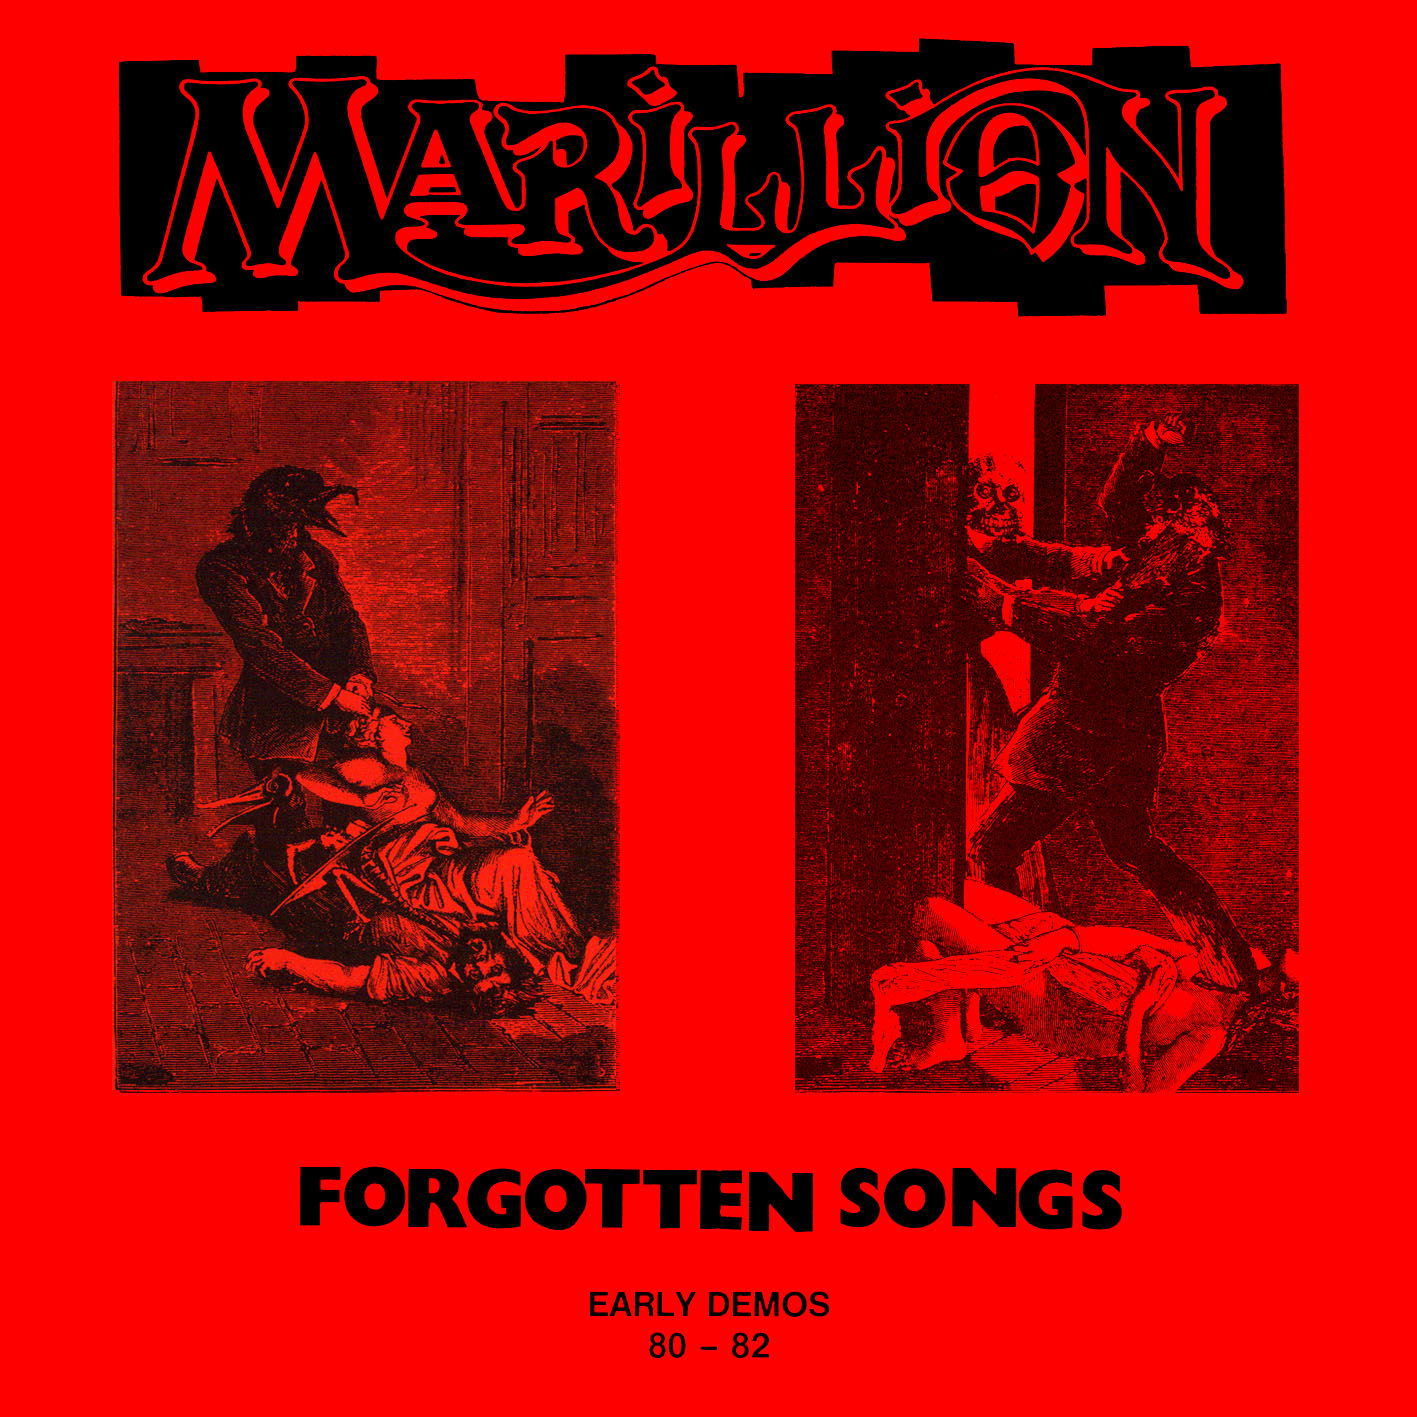 Forget песня. MS forgettable песня. Happiness is the Road, Vol. 1 Marillion. Forgotten songs